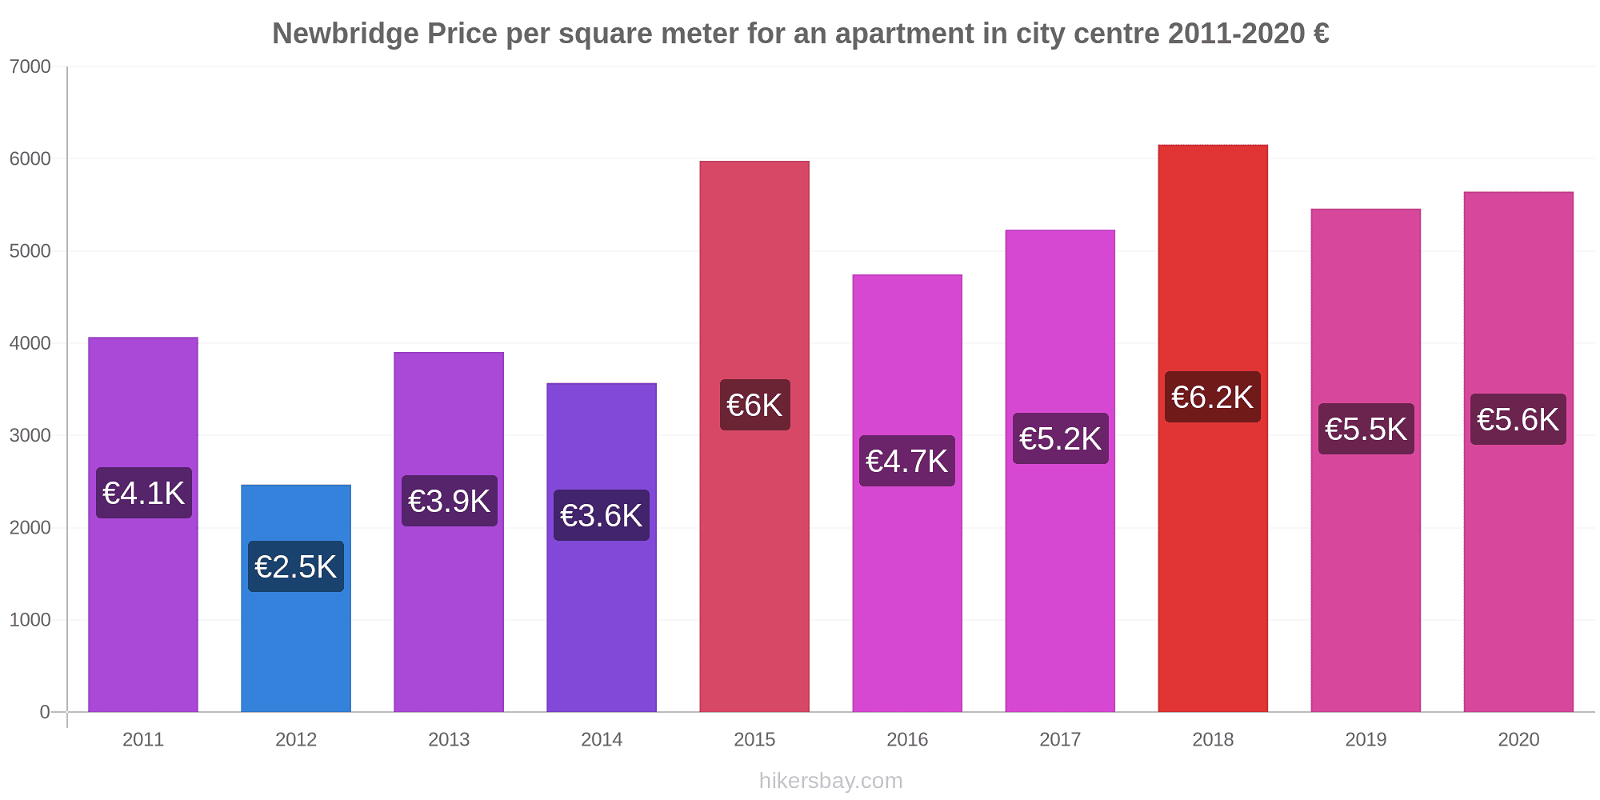 Newbridge price changes Price per square meter for an apartment in city centre hikersbay.com